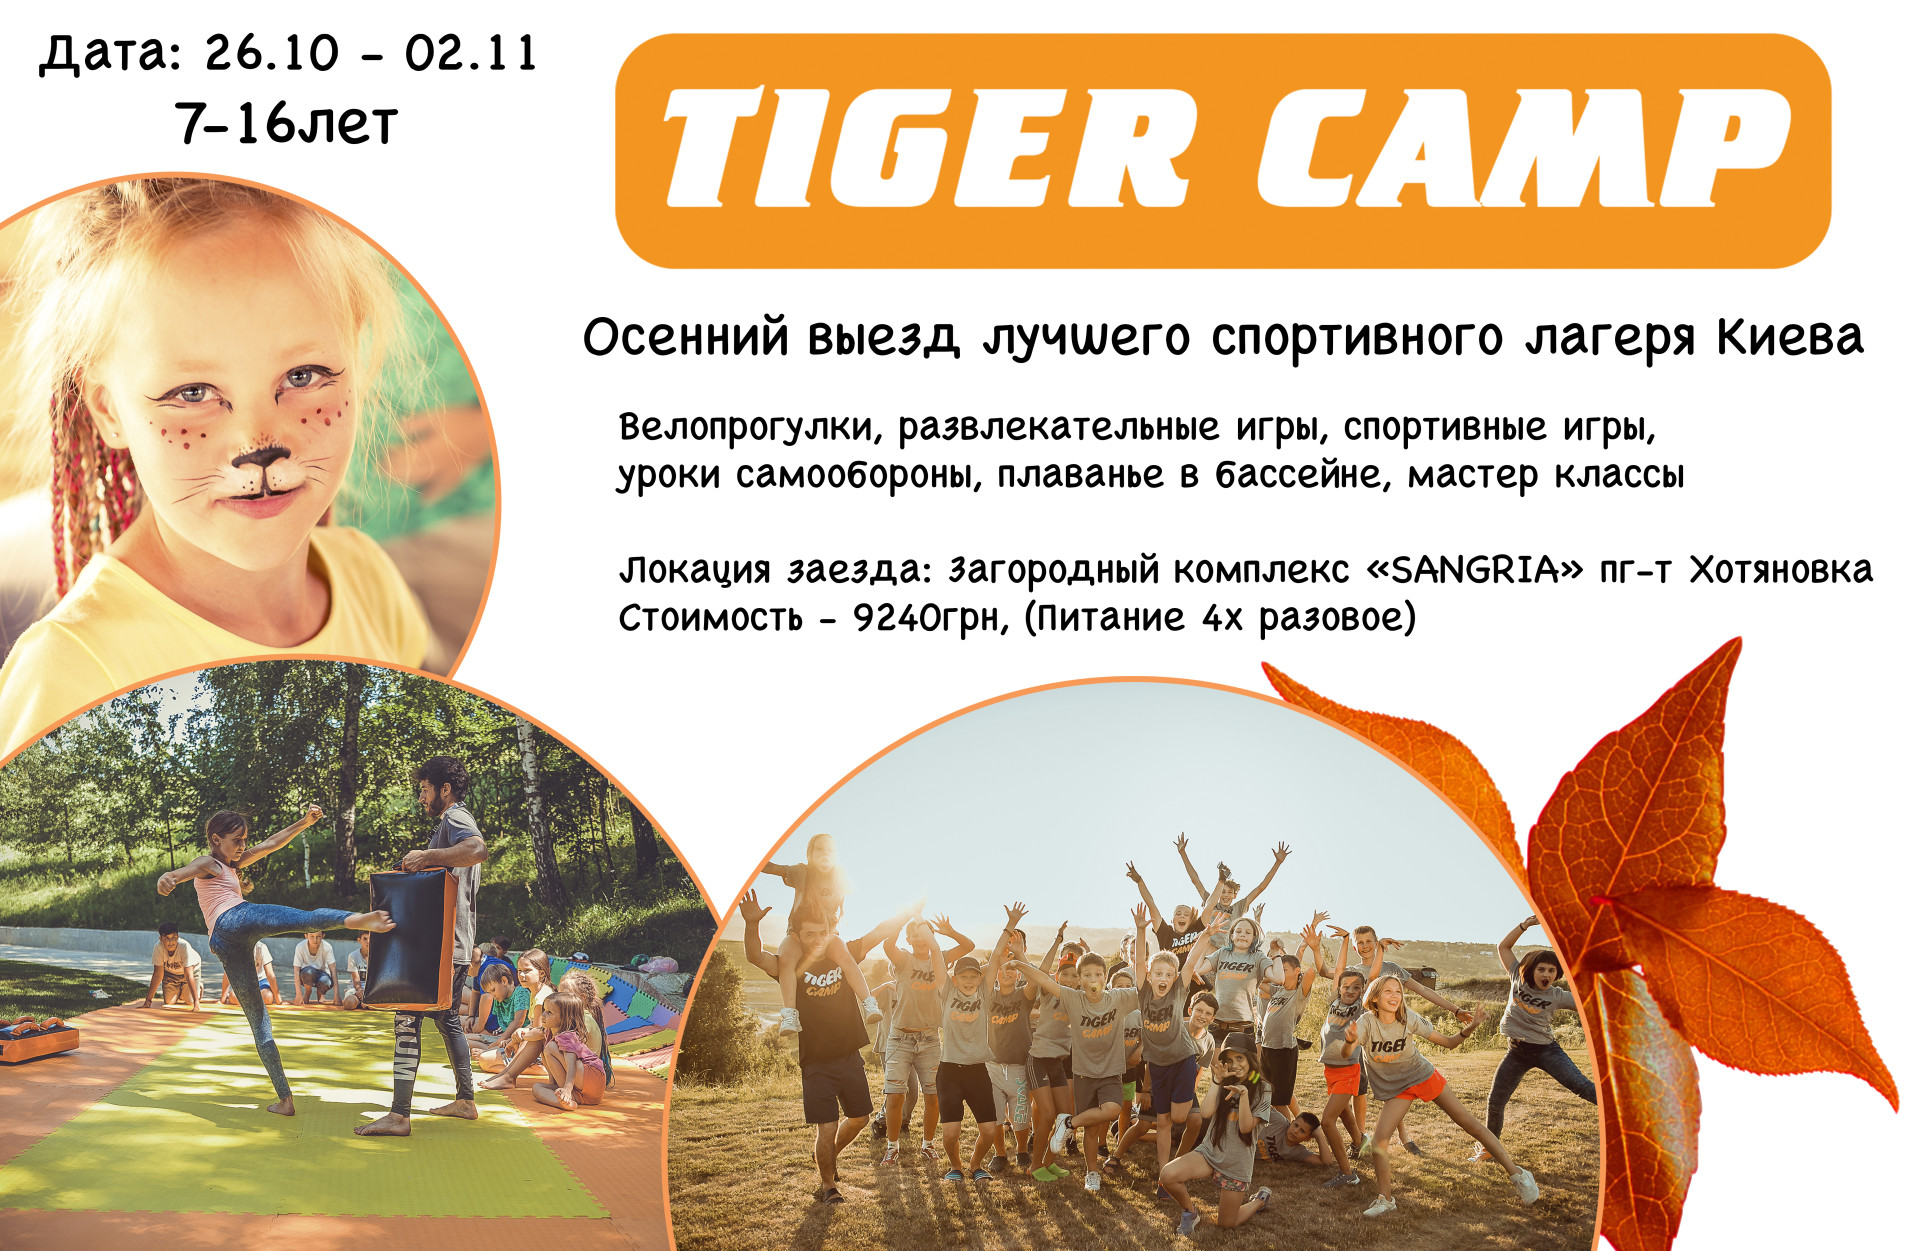 Sport Camp Tiger